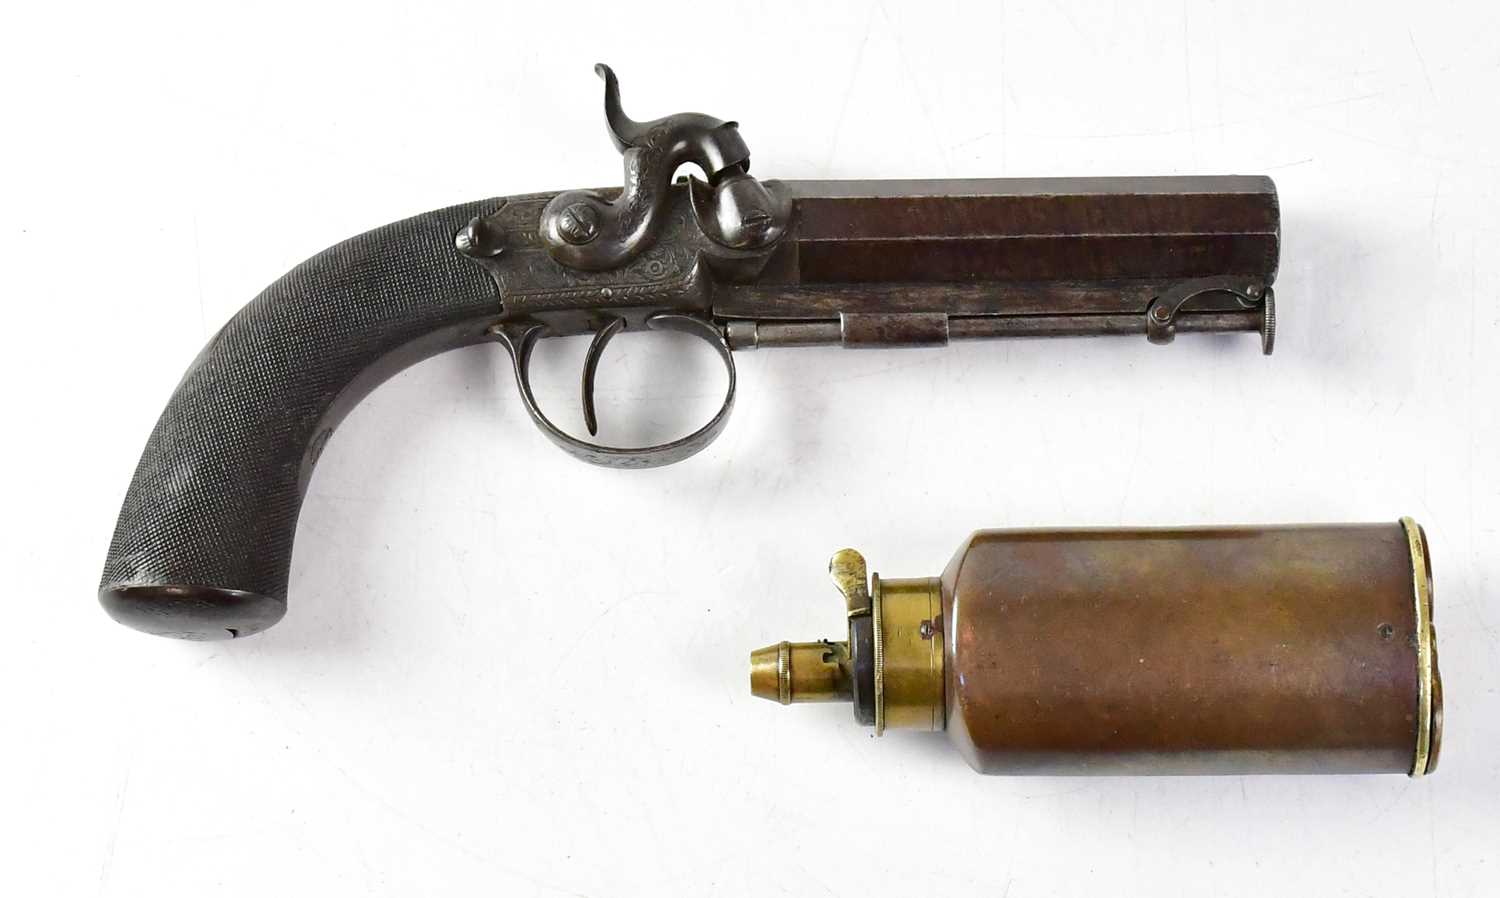 G & J DEANE, LONDON BRIDGE; a 19th century 28 bore percussion cap pocket pistol, 3.5" octagonal